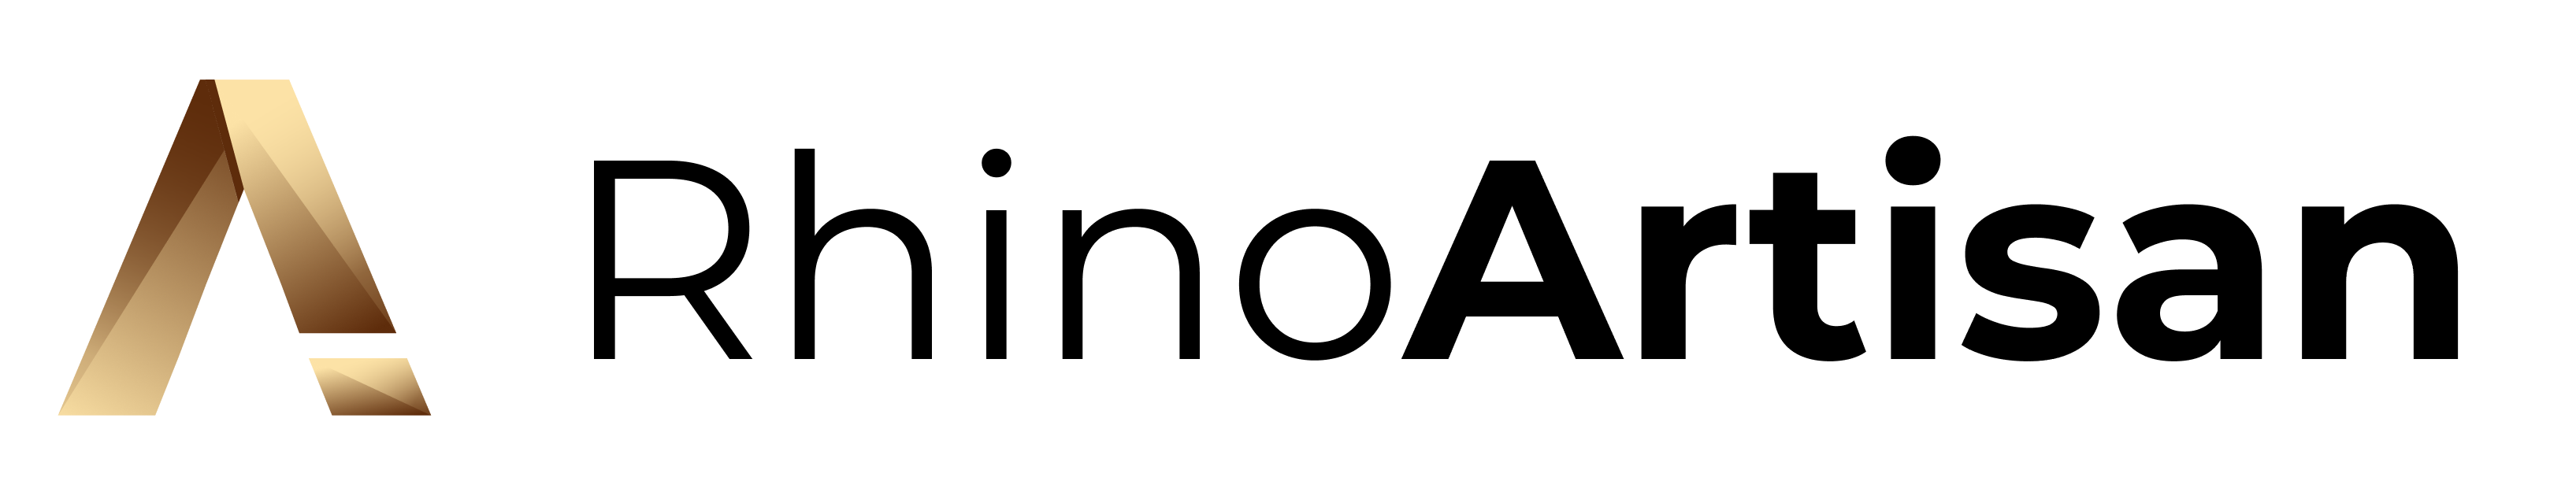 RhinoArtisan logo